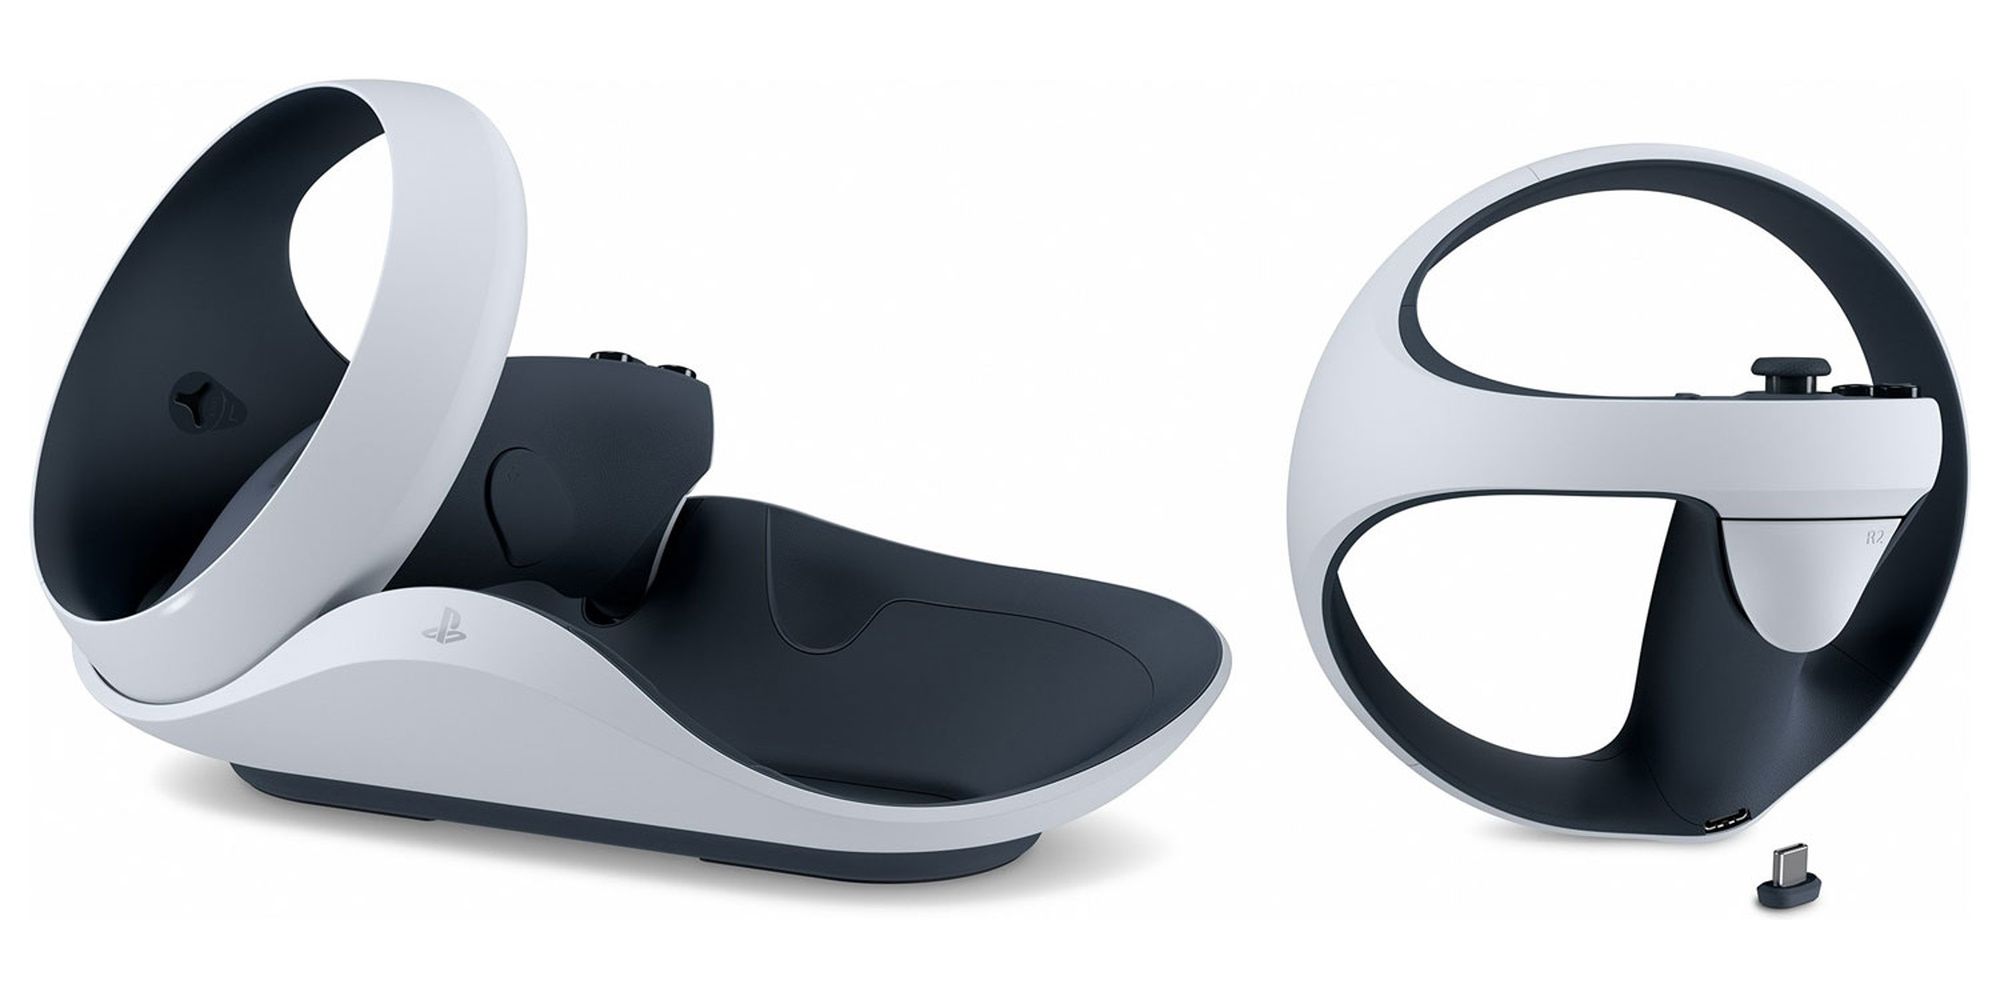 PS VR2 Charging Dock Could Melt Your Sense Controller